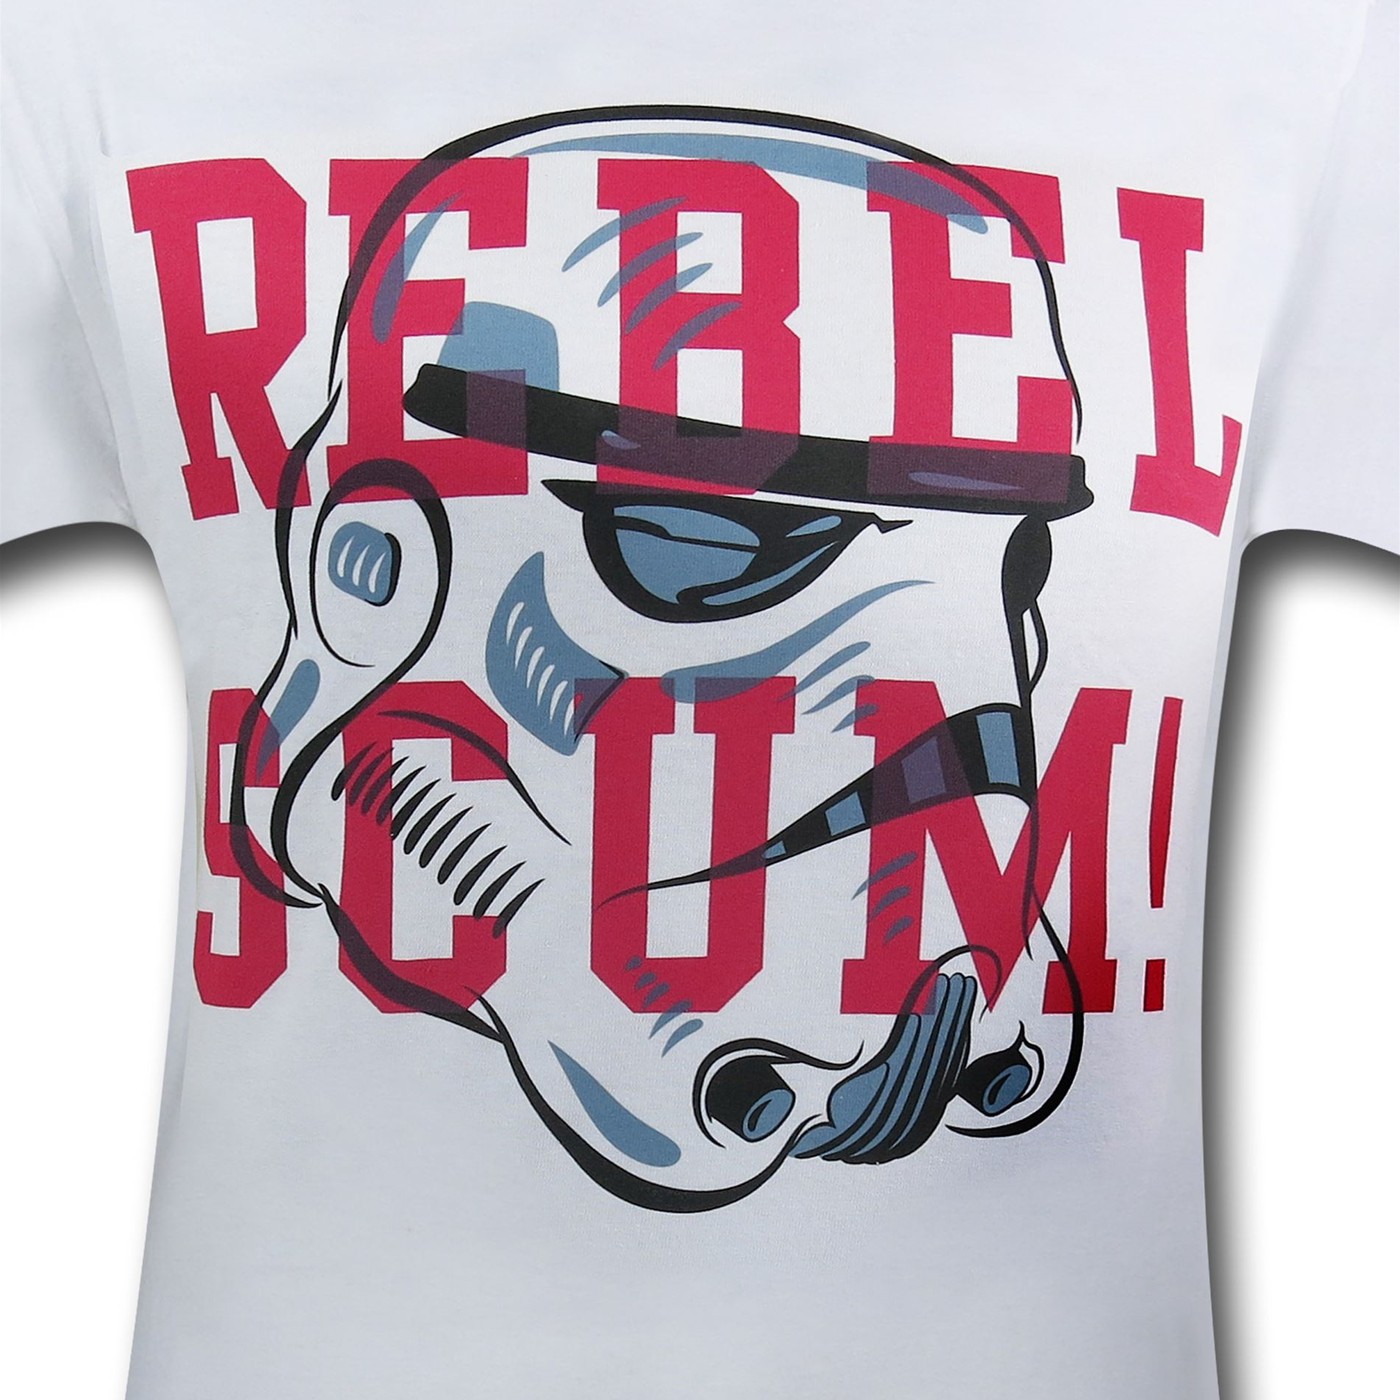 Star Wars Stormtrooper Rebel Scum T-Shirt